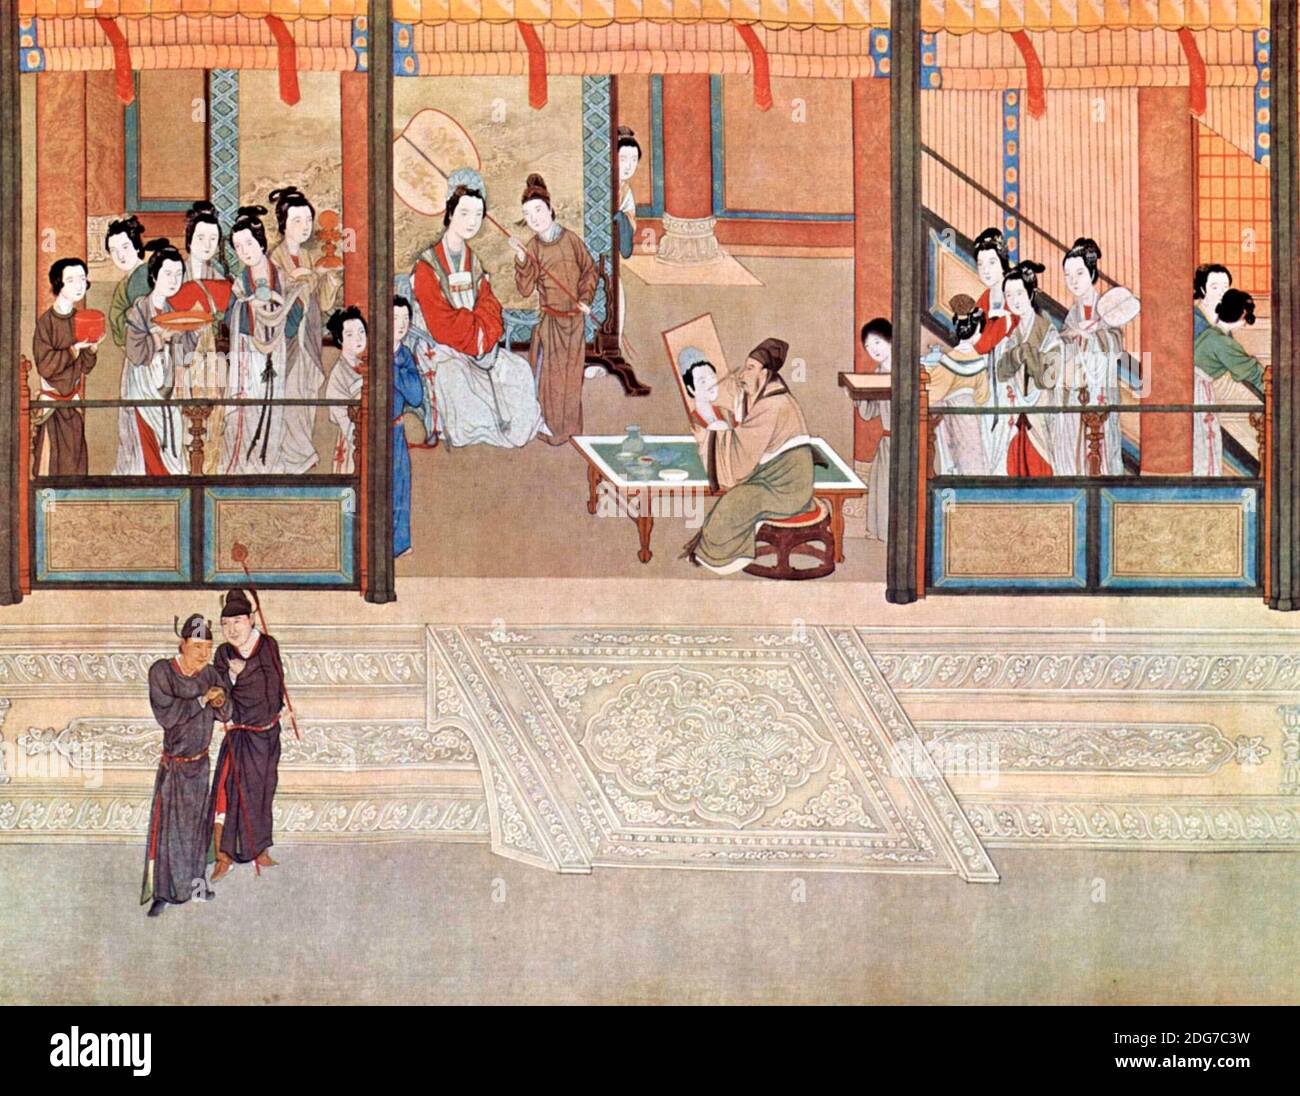 Matin de printemps dans le Palais Han - Han Gong Chun Xiao - dynastie Ming, Chine Banque D'Images